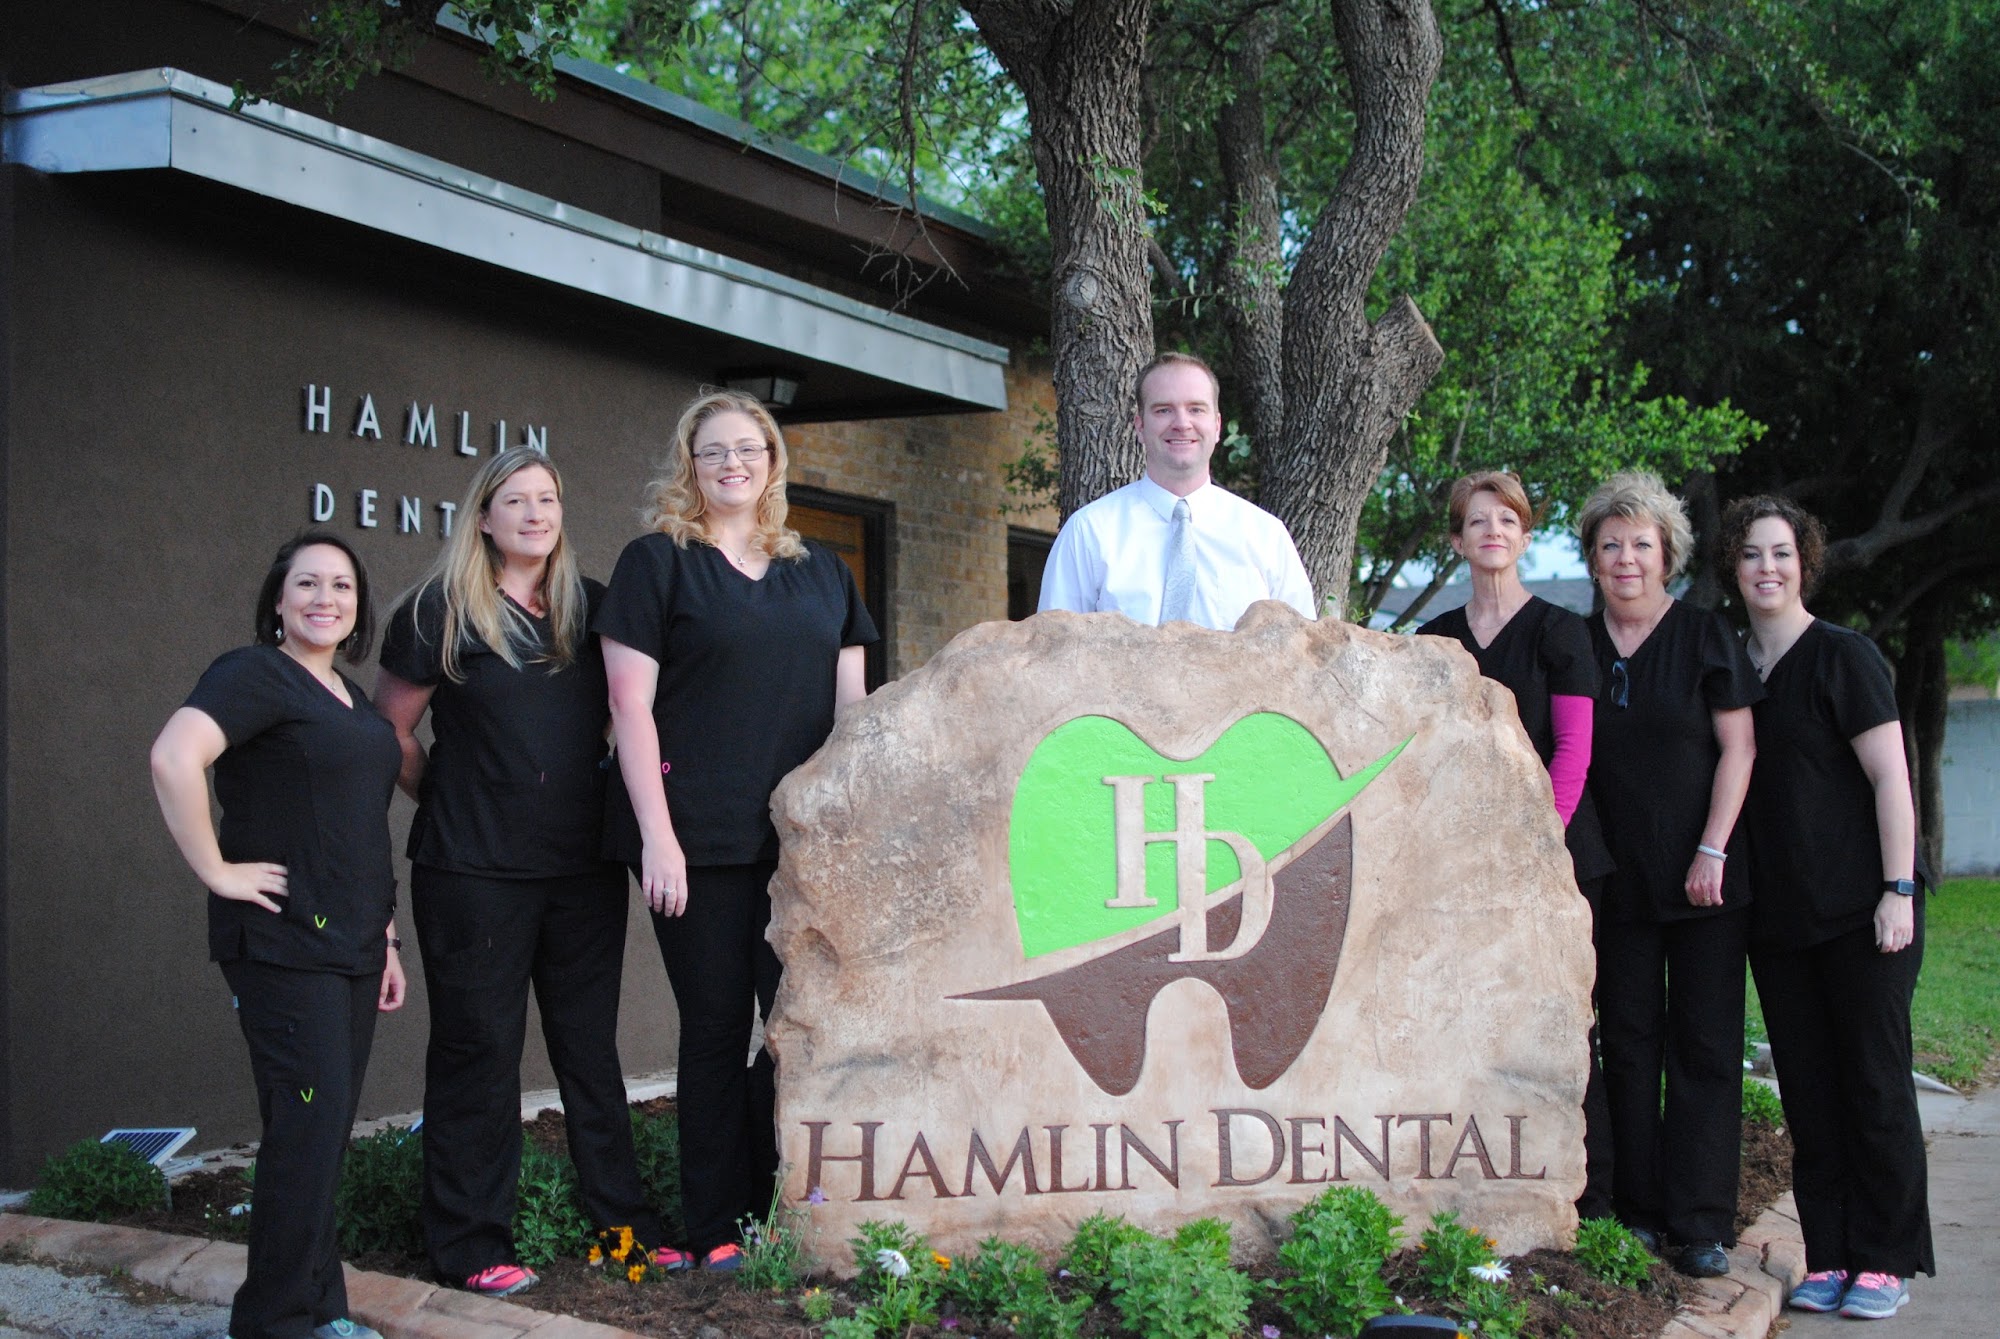 Hamlin Dental 32 N Central Ave, Hamlin Texas 79520